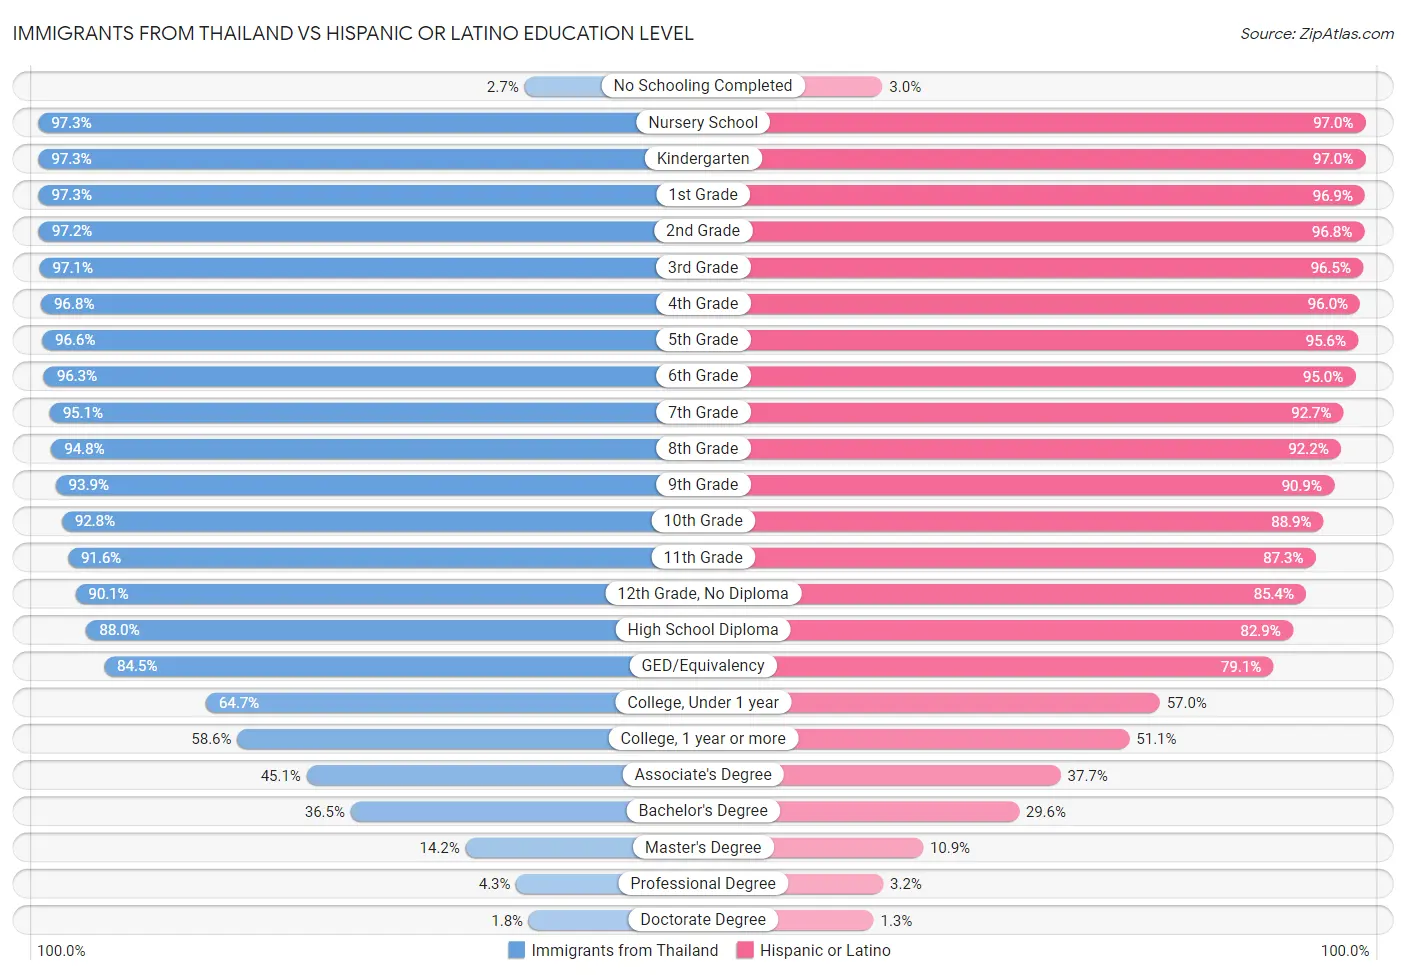 Immigrants from Thailand vs Hispanic or Latino Education Level